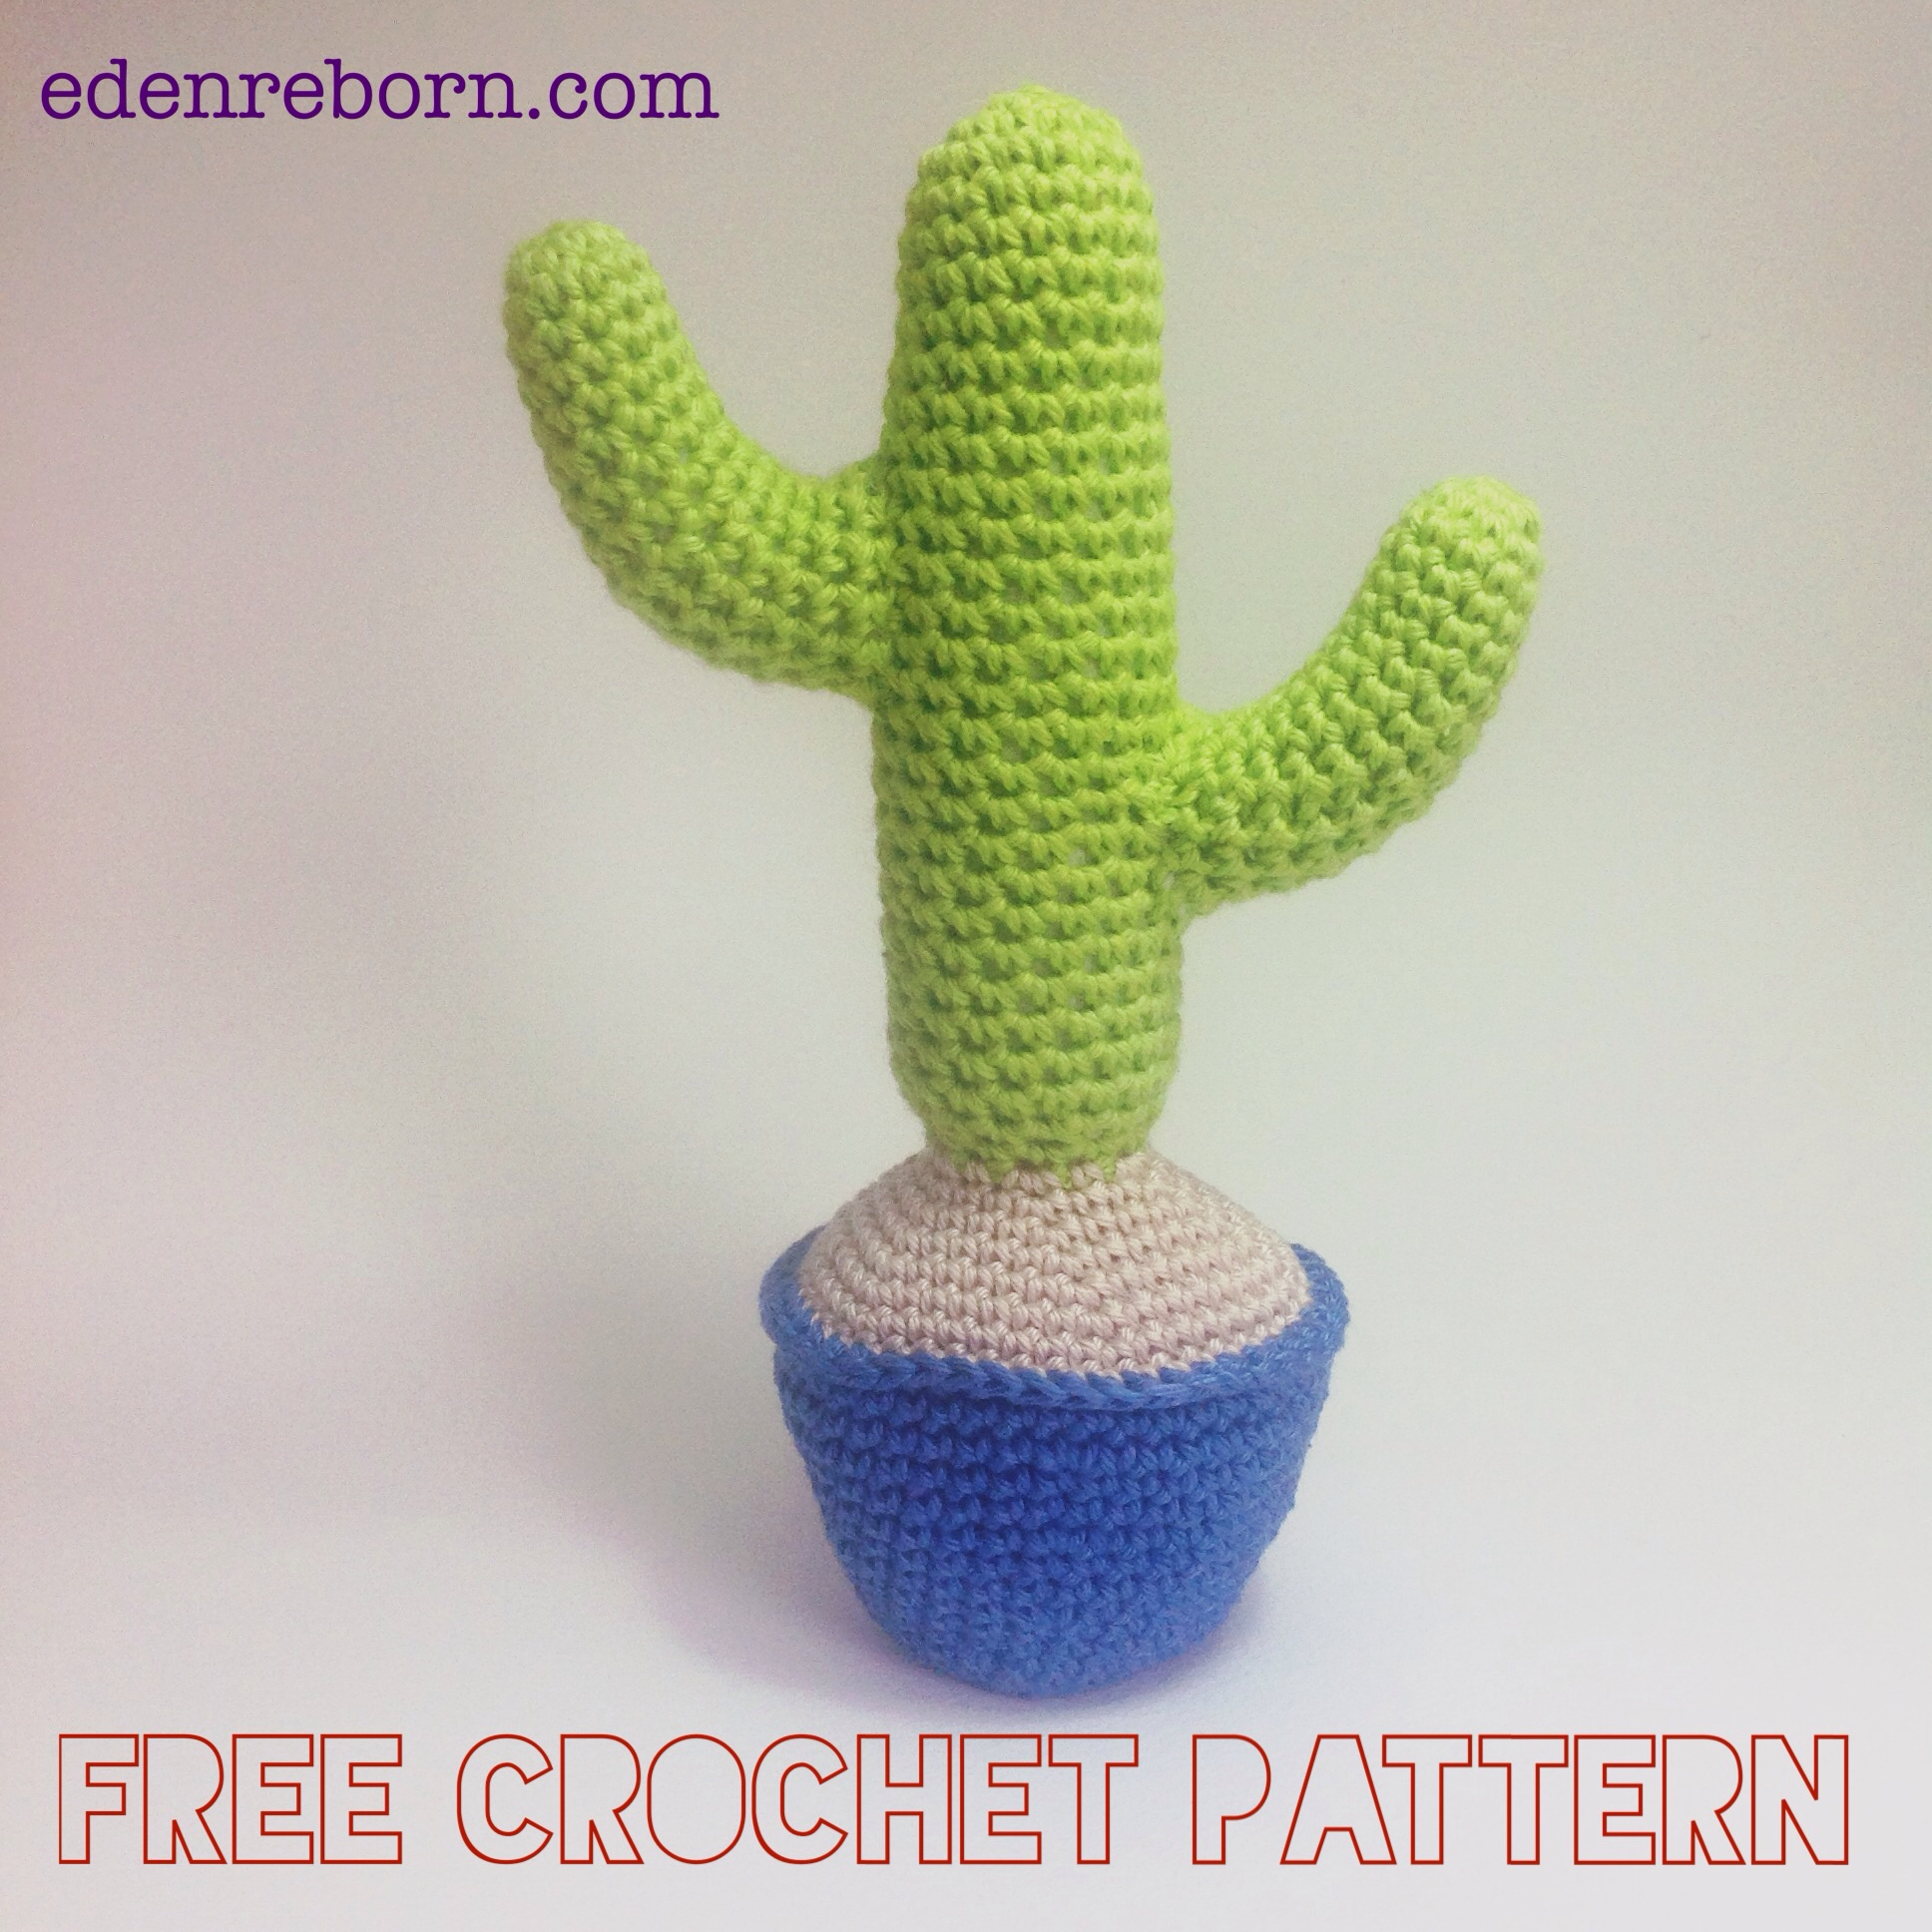 Crochet Cactus Pattern Free Crochet Cactus Pattern Eden Reborn